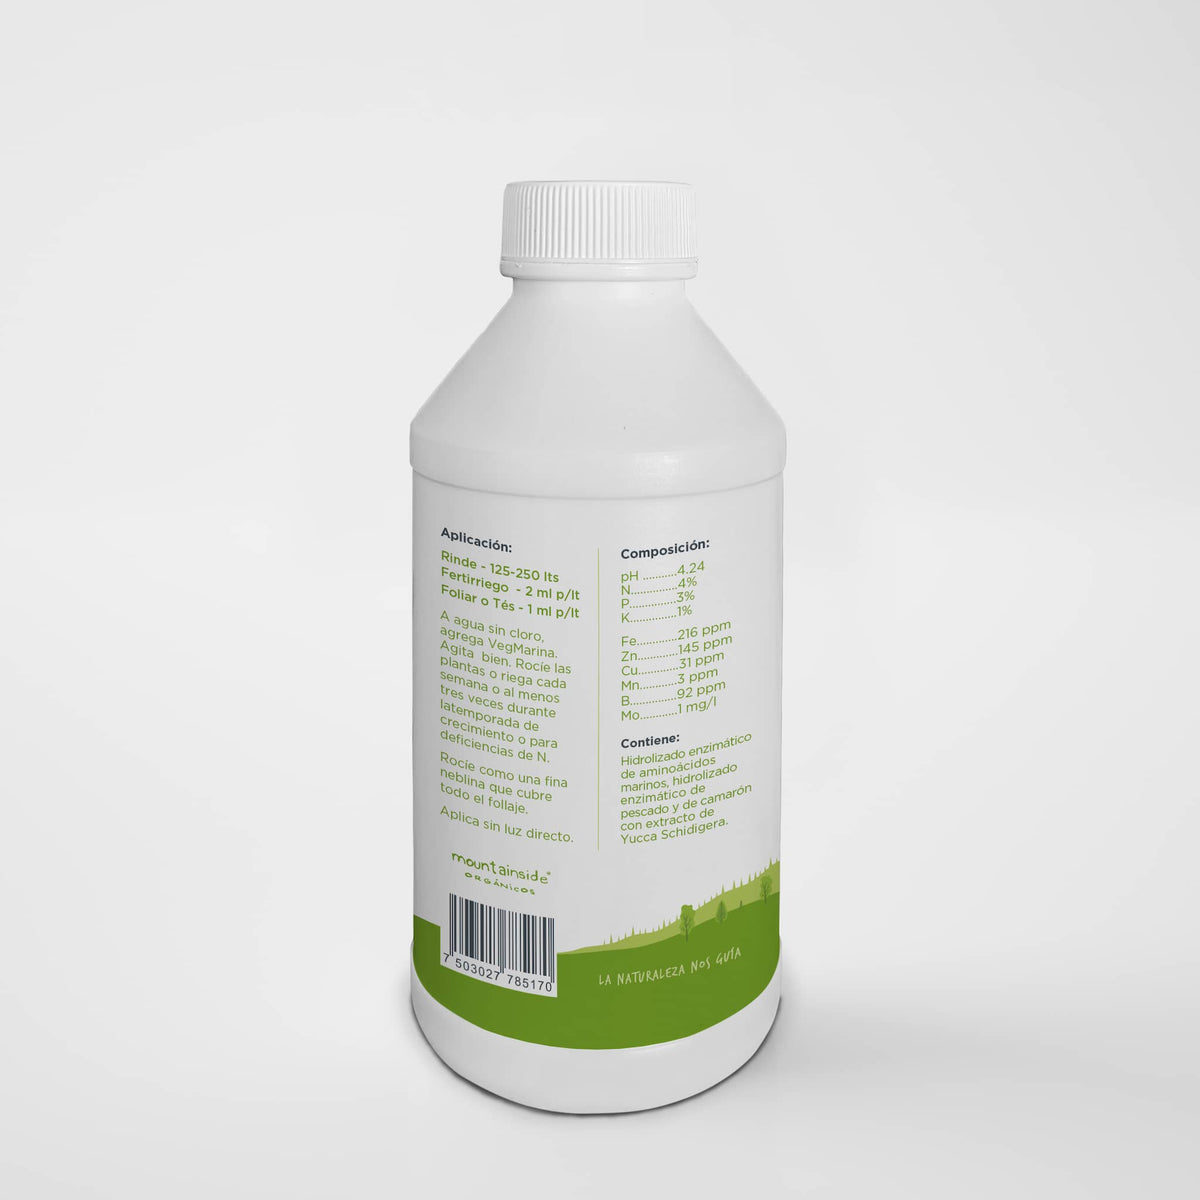 VegMarina® Líquido - Fertilizante Orgánico para Etapa Vegetativa